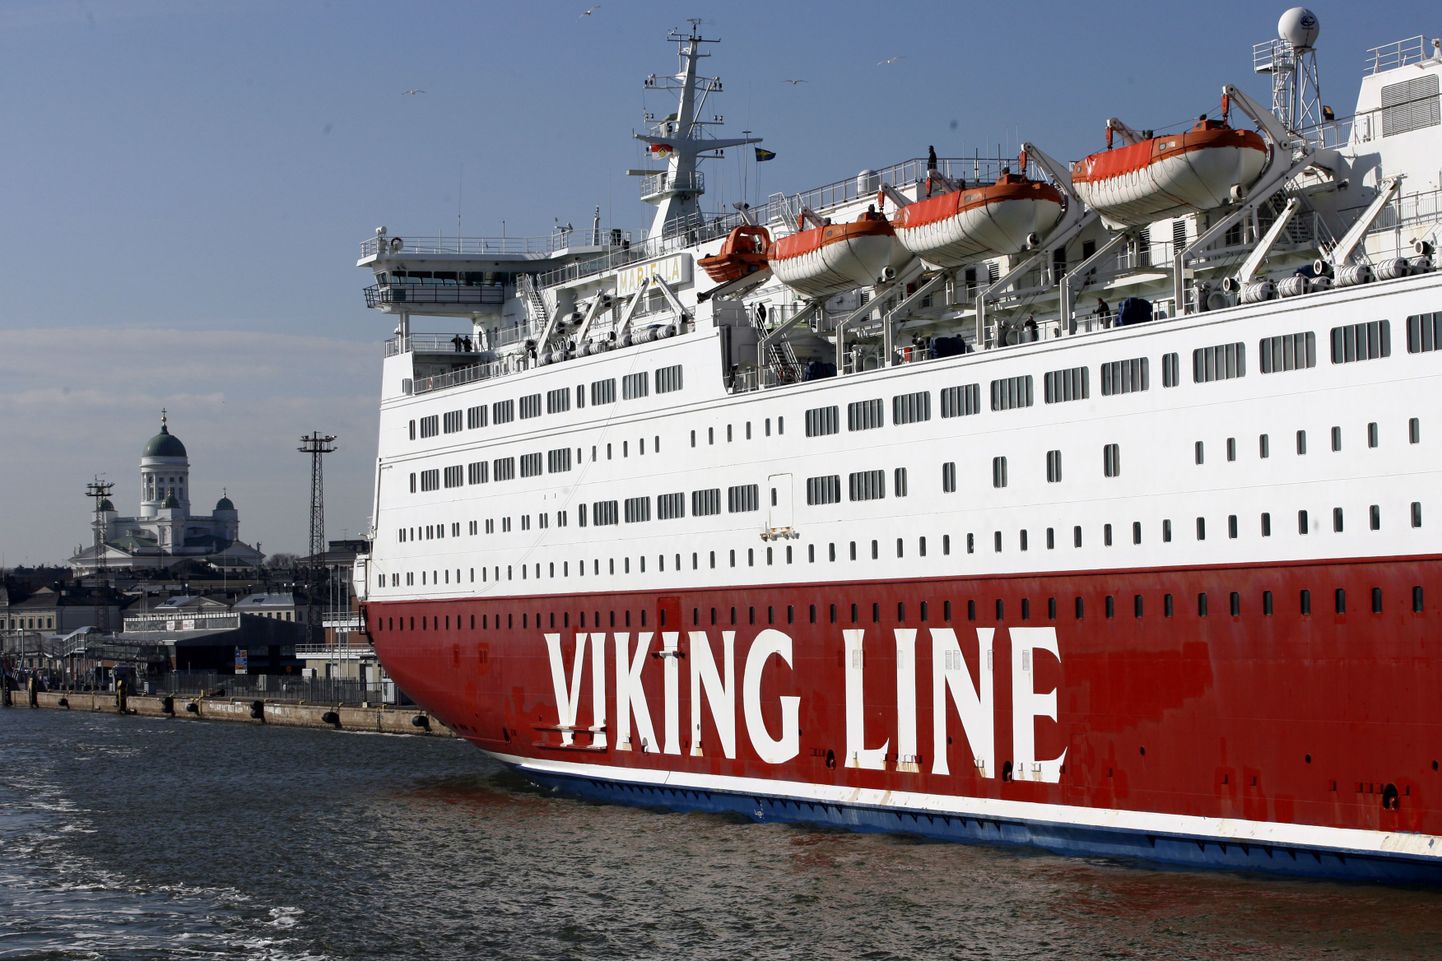 Viking Line'i Mariella Helsingi sadamas.